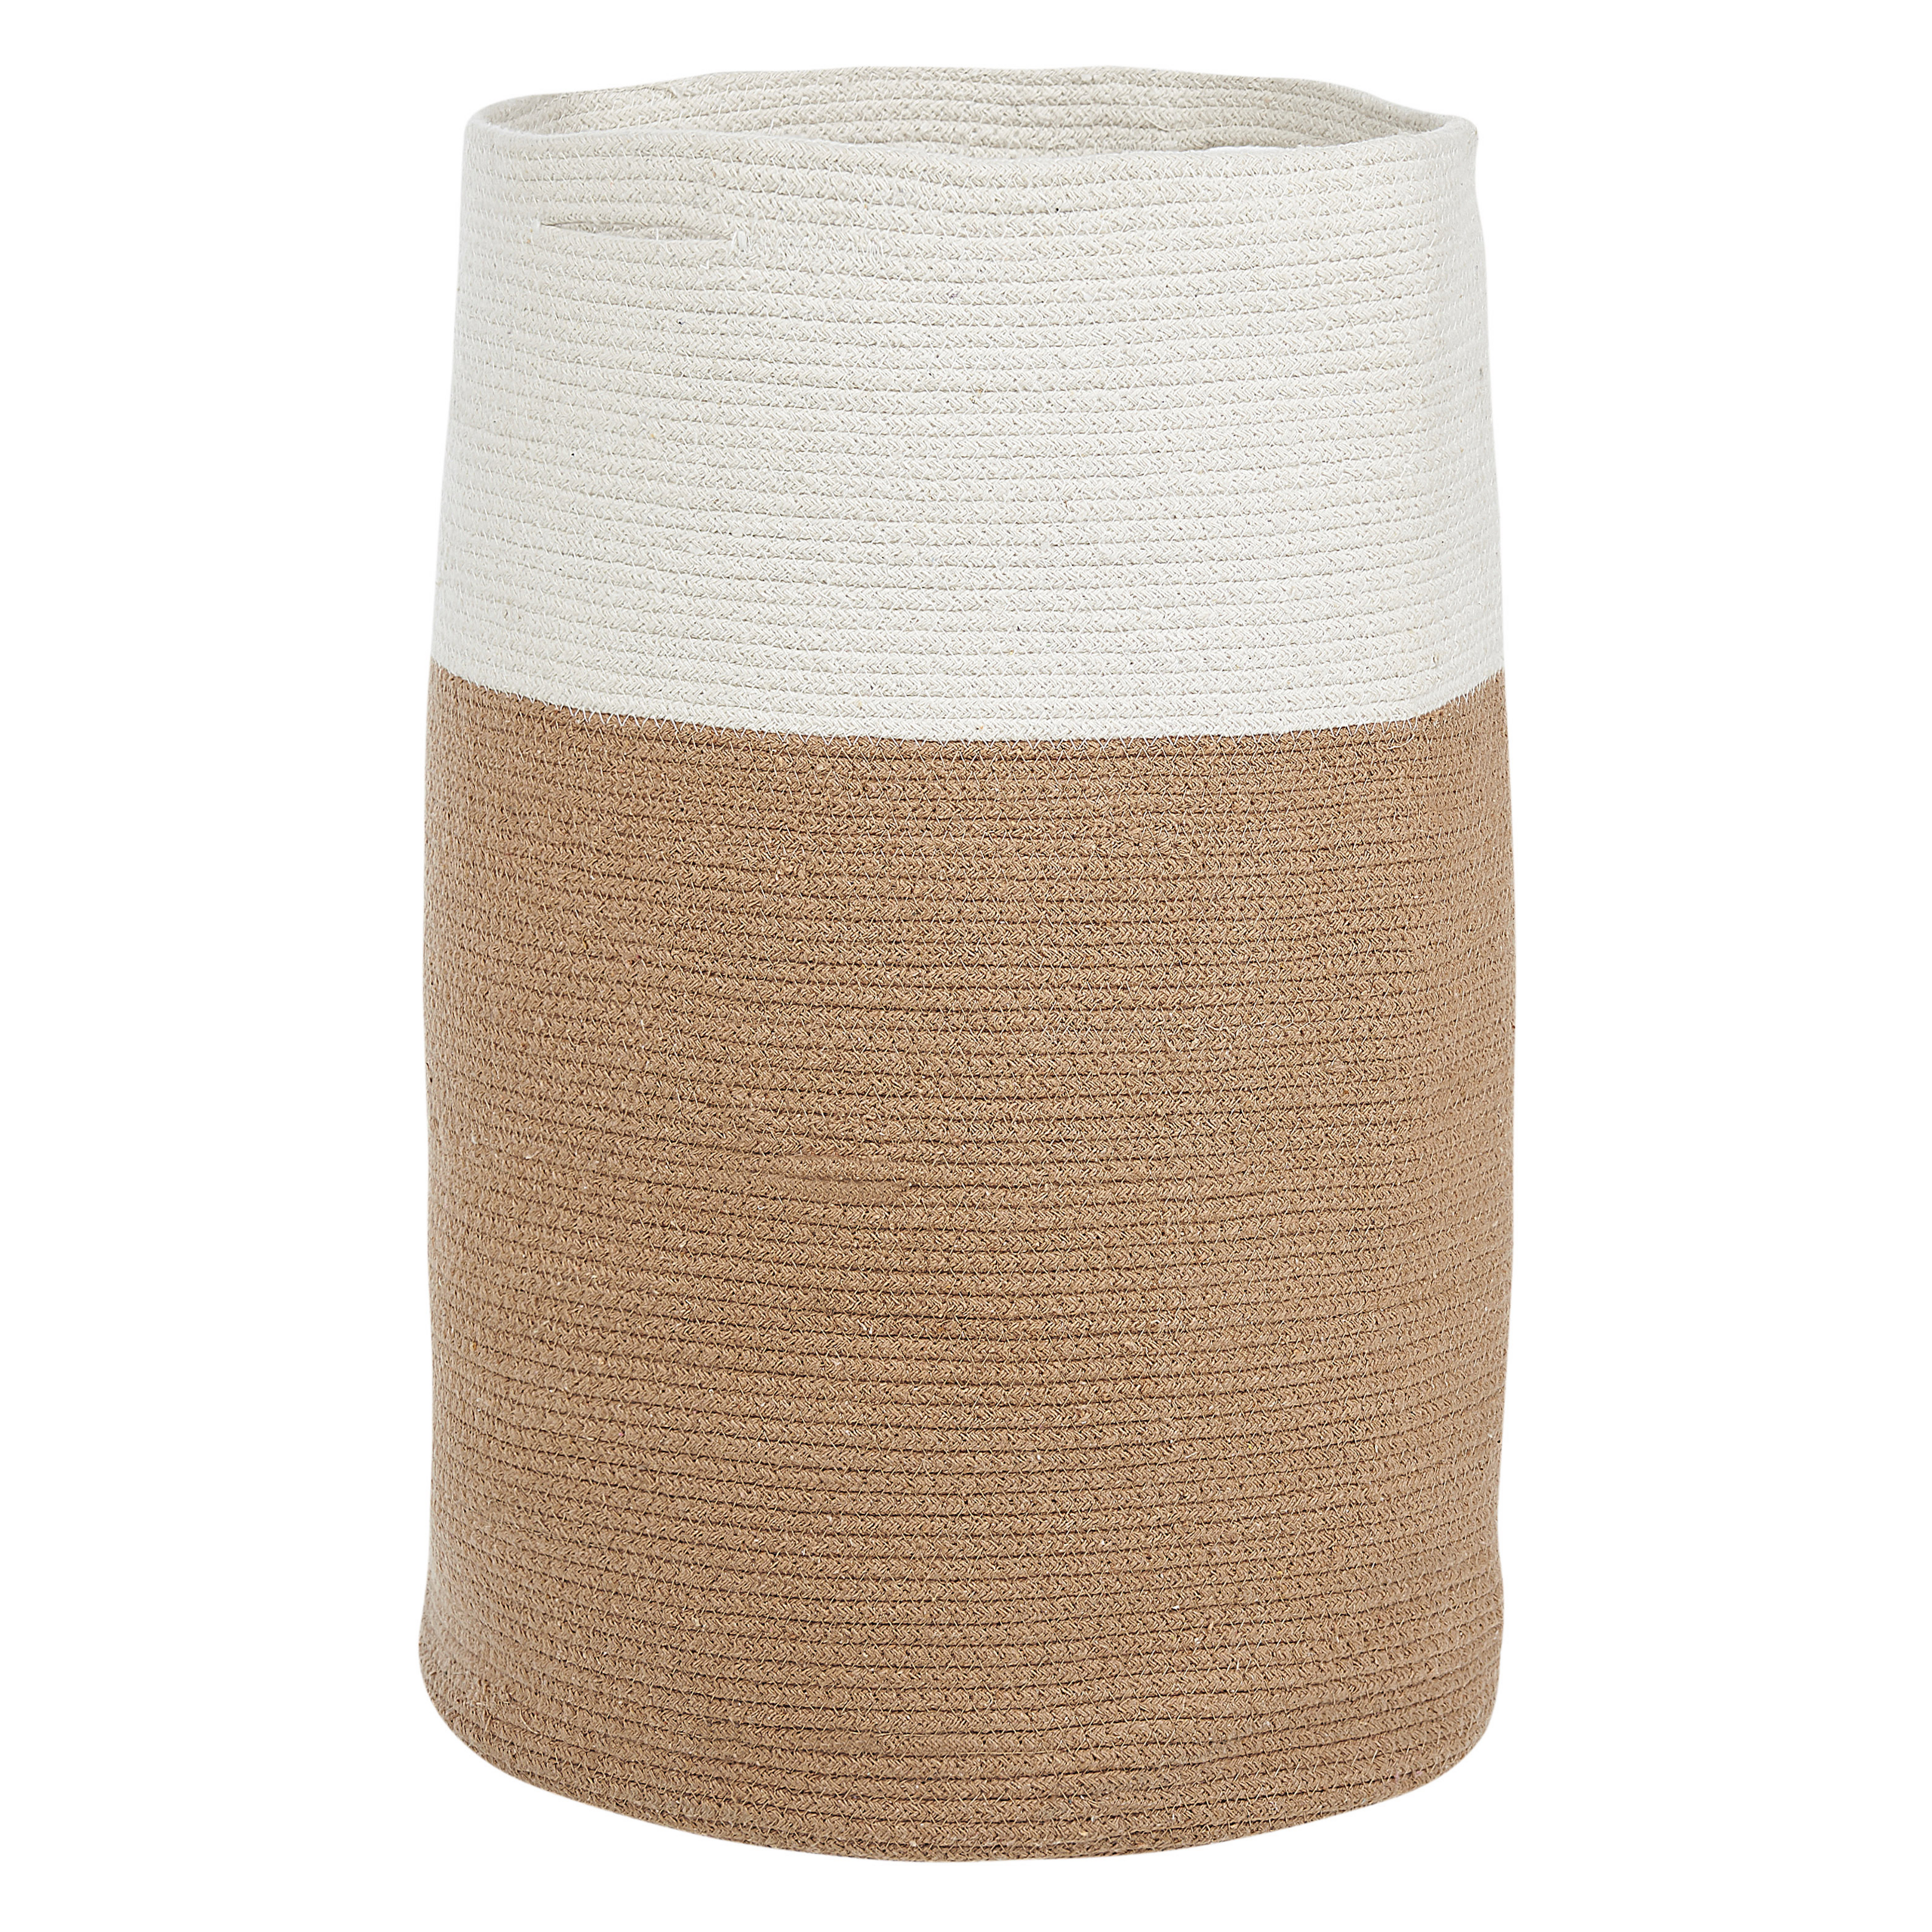 Beliani Storage Basket Cotton Beige and White Braided Laundry Hamper Fabric Bin Material:Cotton Size:52x57x52